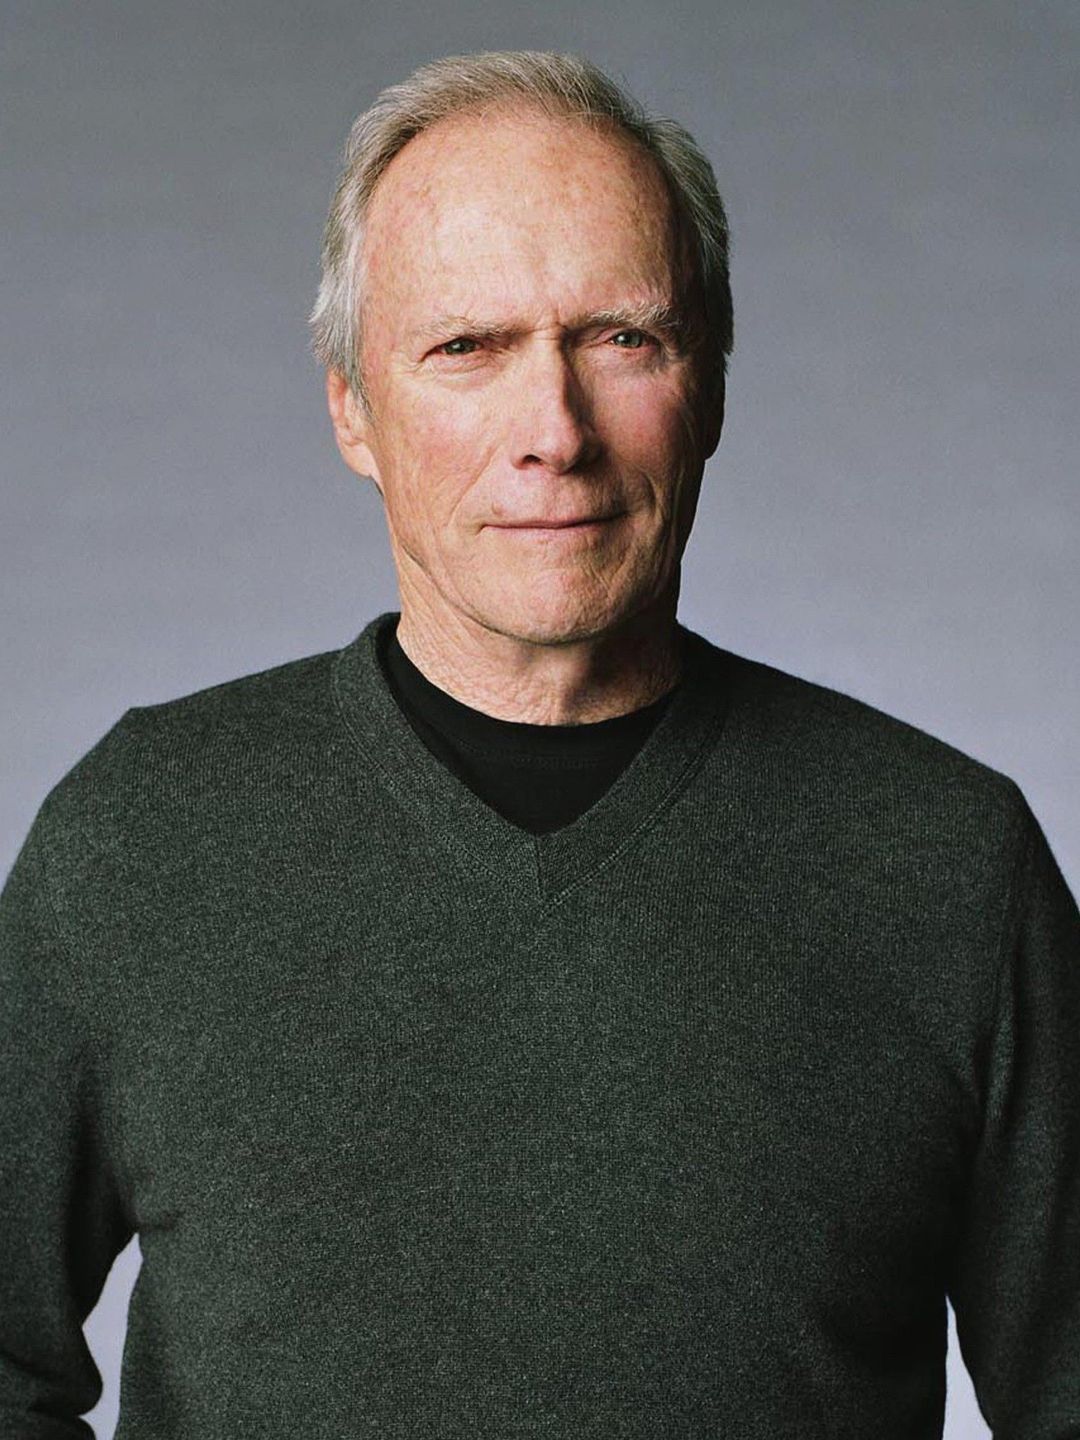 Clint Eastwood education